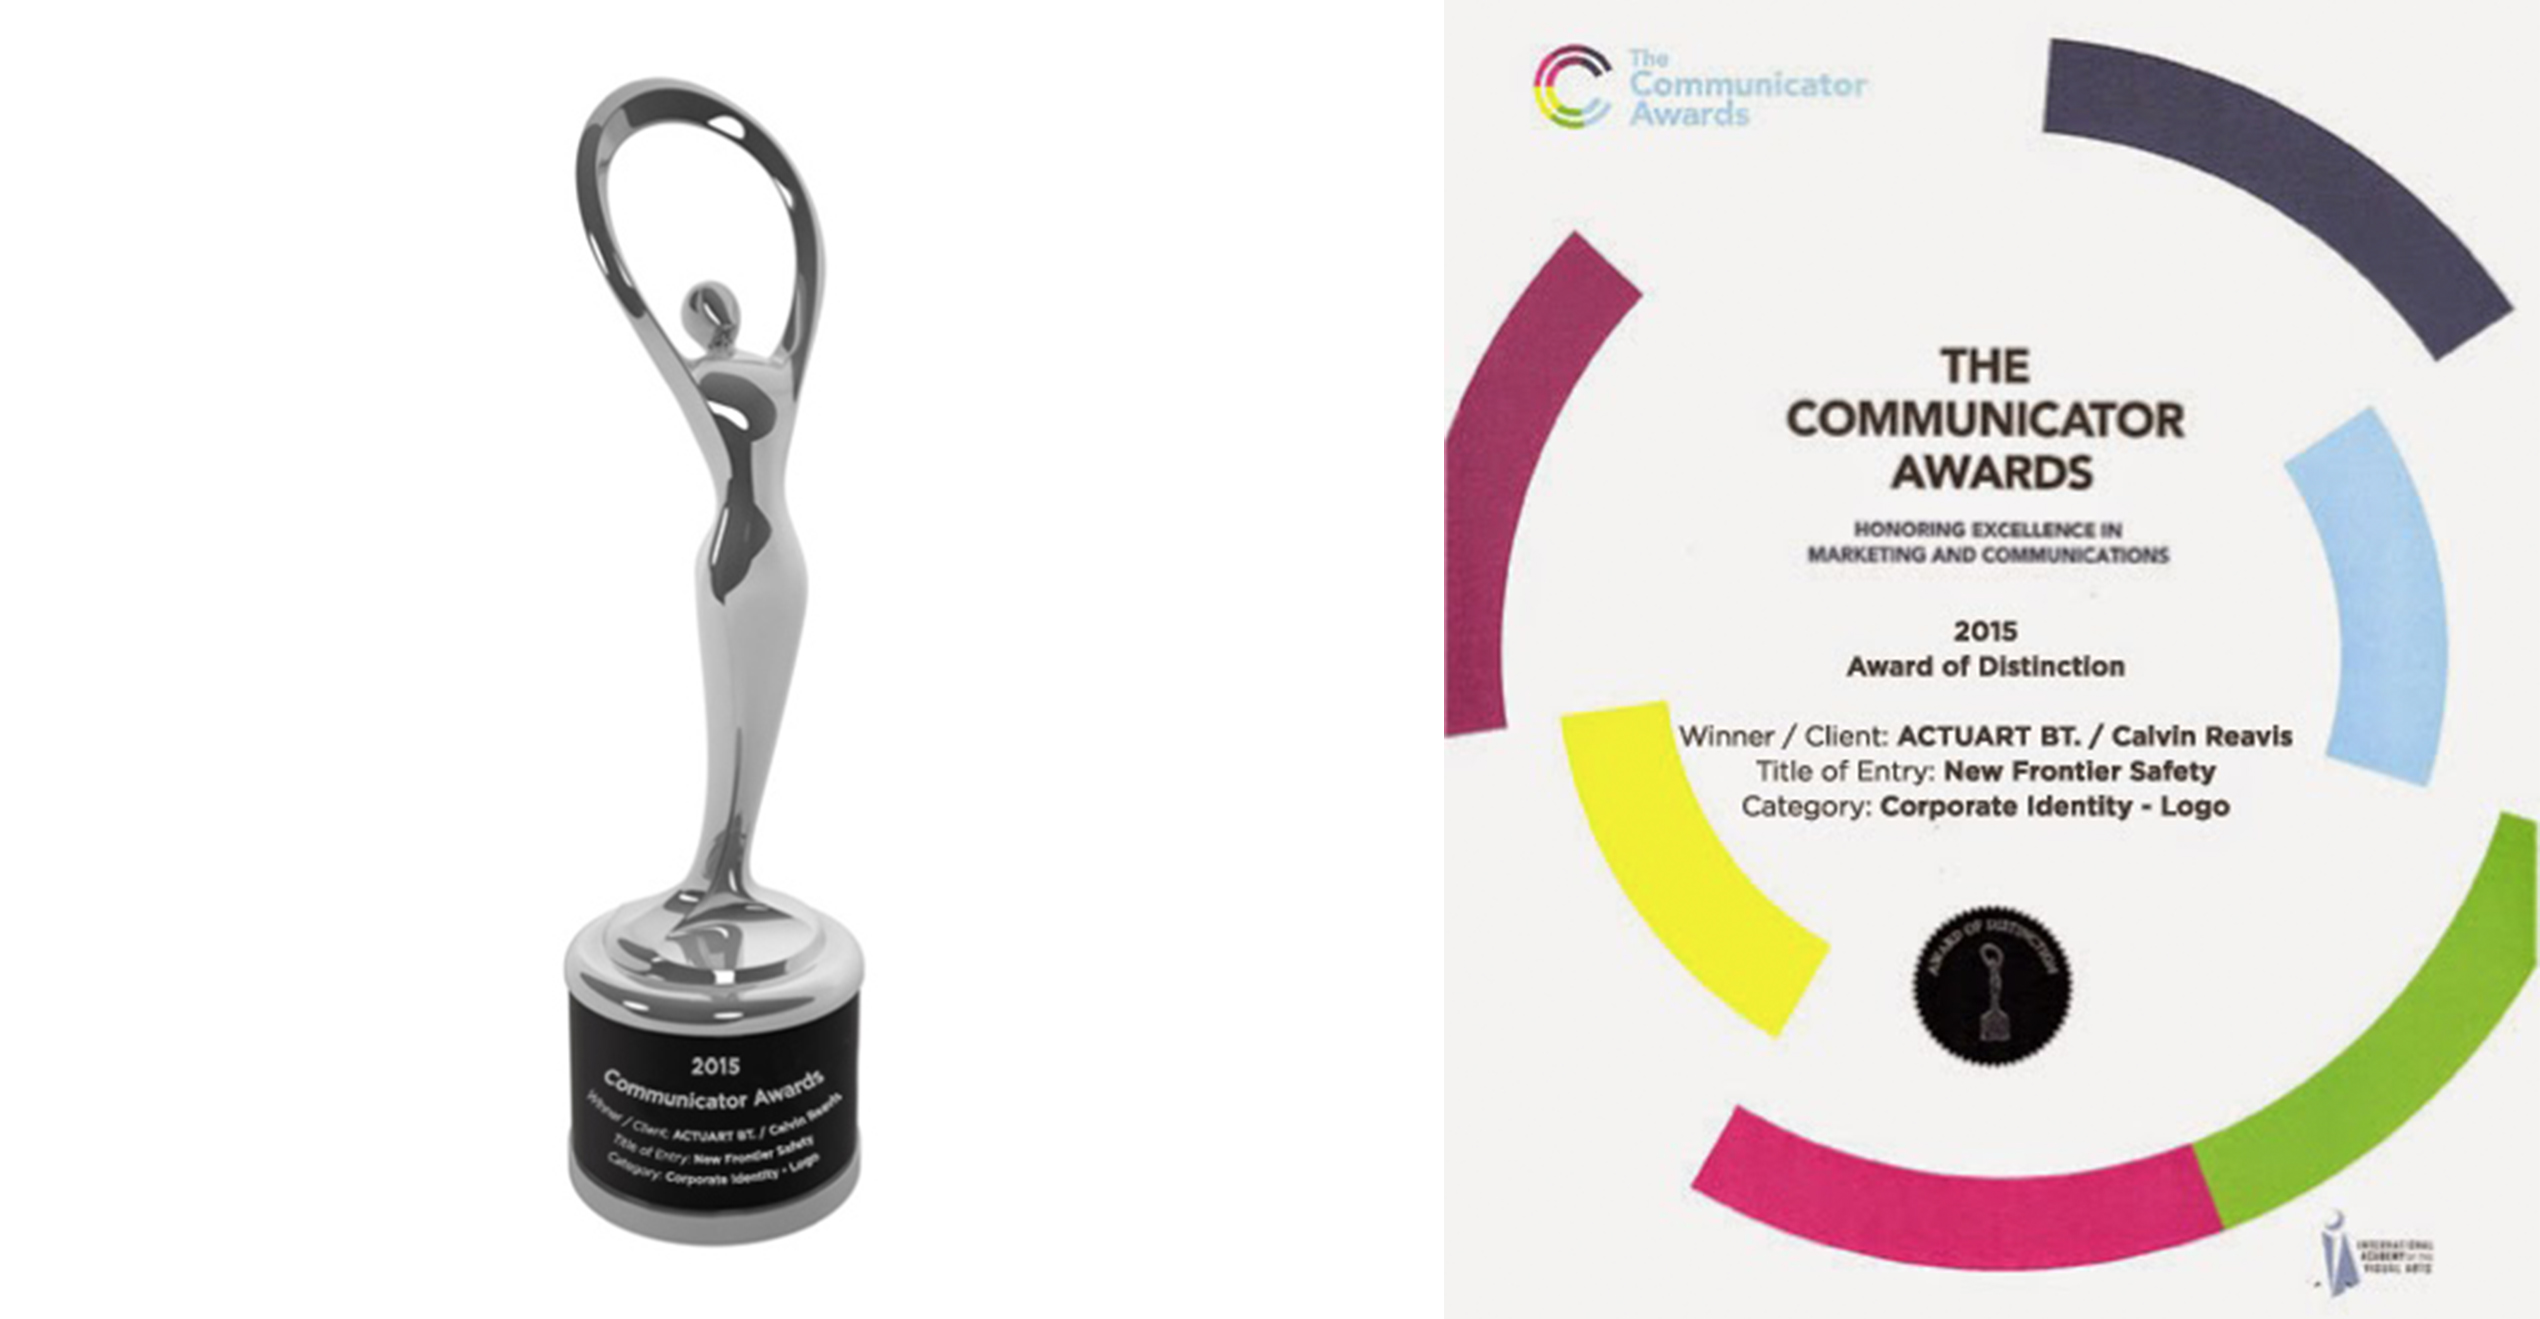 21st Annual Communicator Awards Notification, U.S.A.